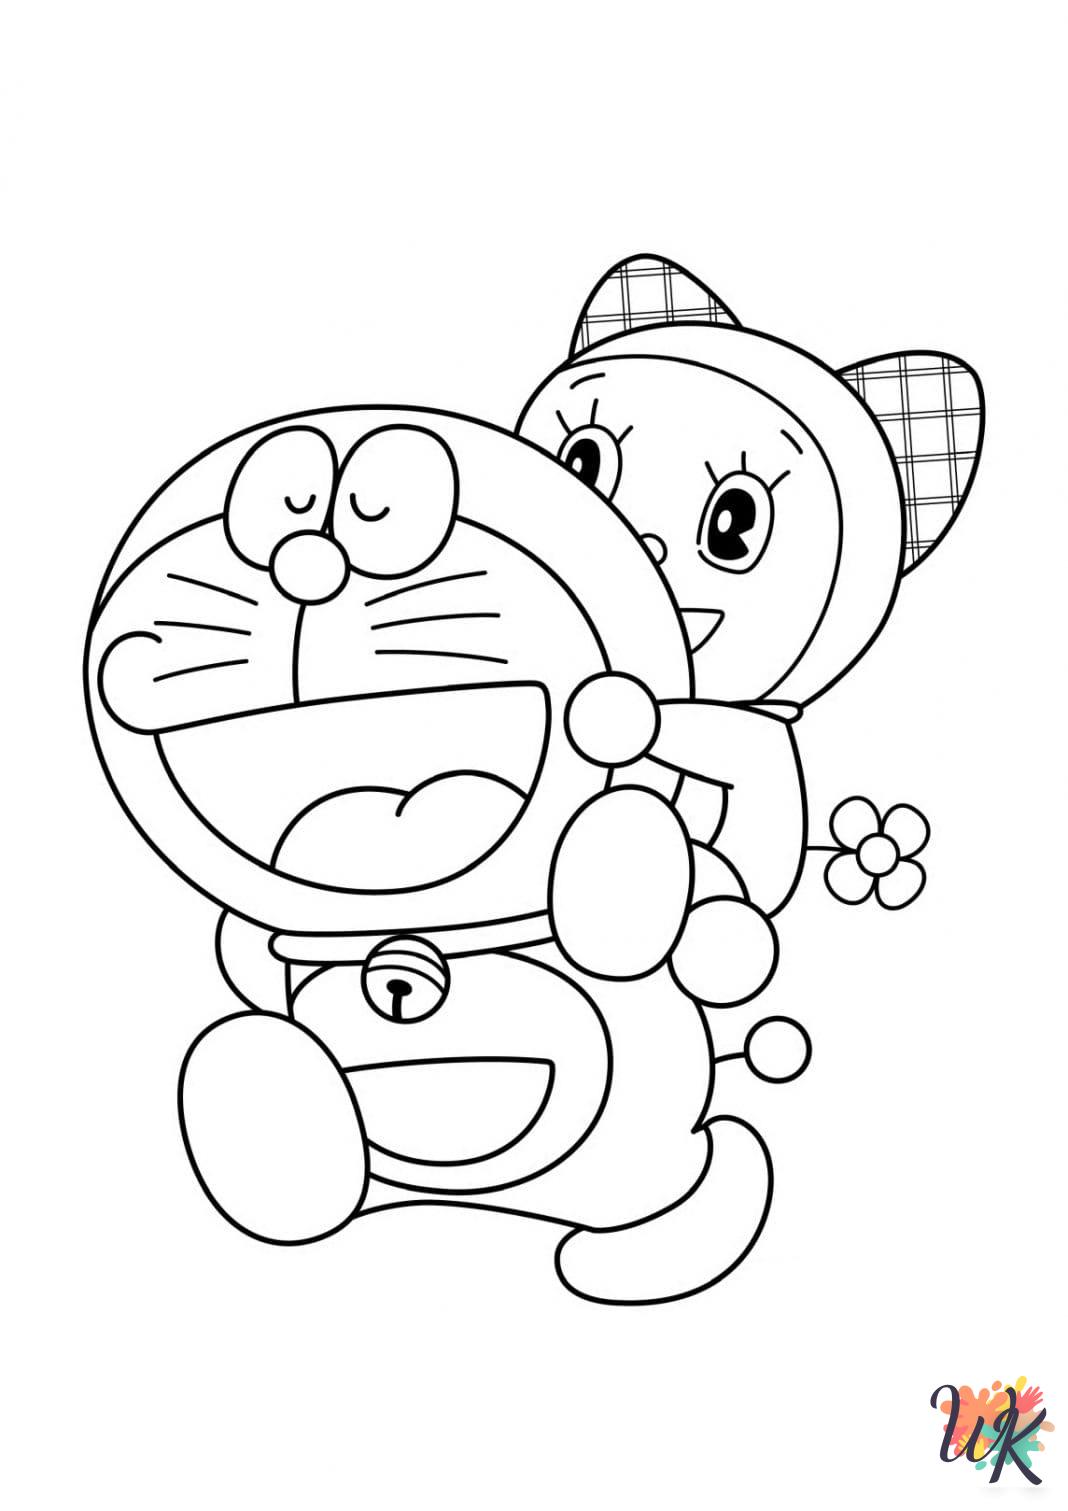 Doraemon free coloring pages 1